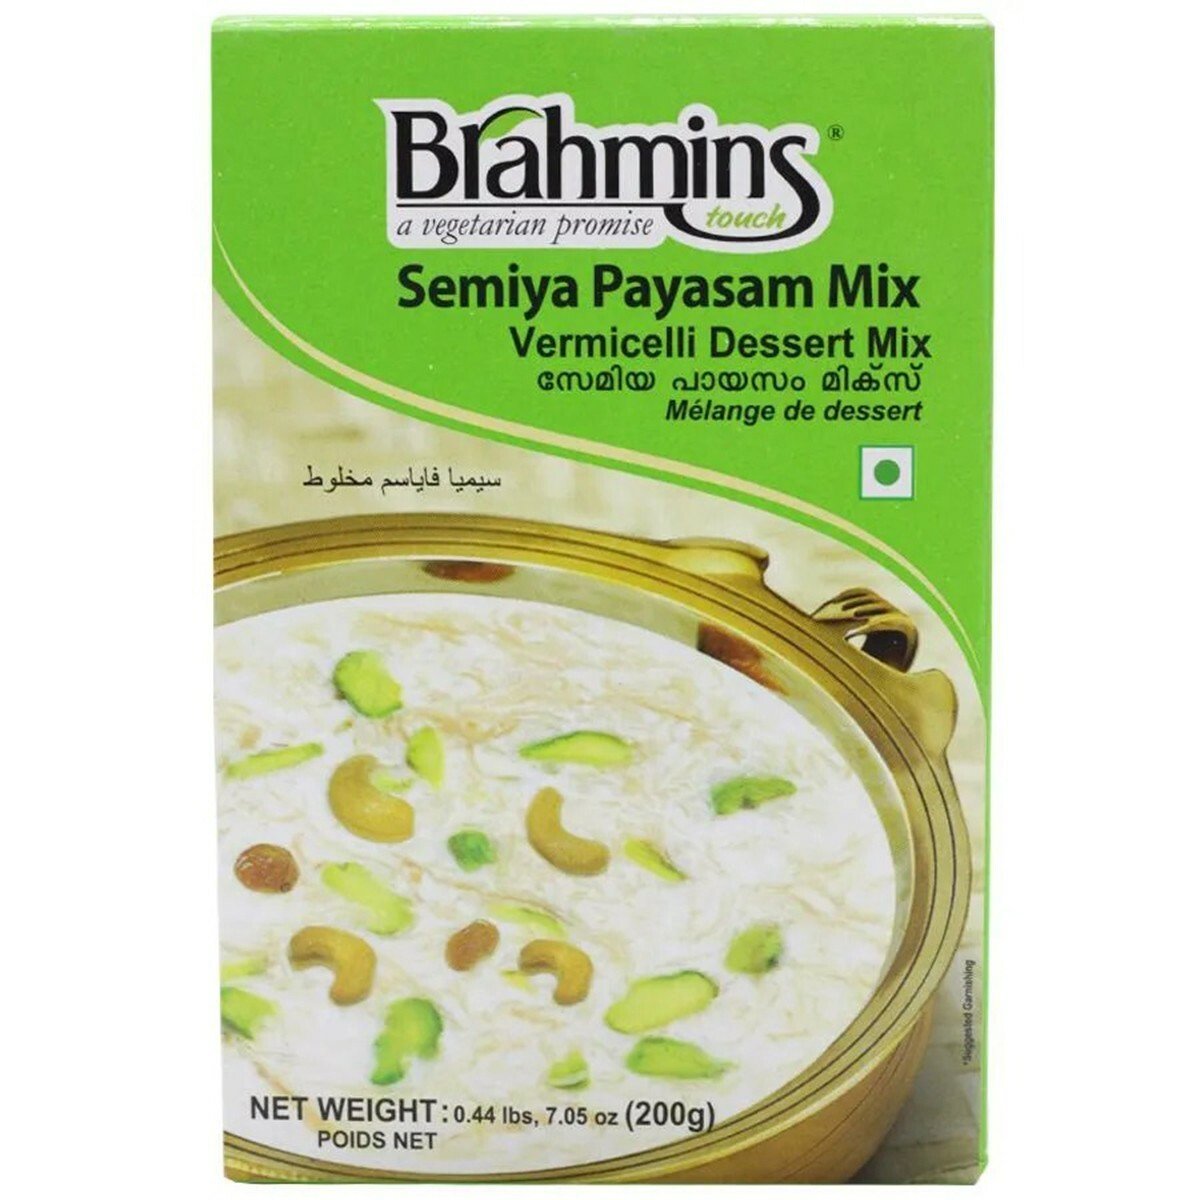 Brahmins semiya payasam mix(200g)